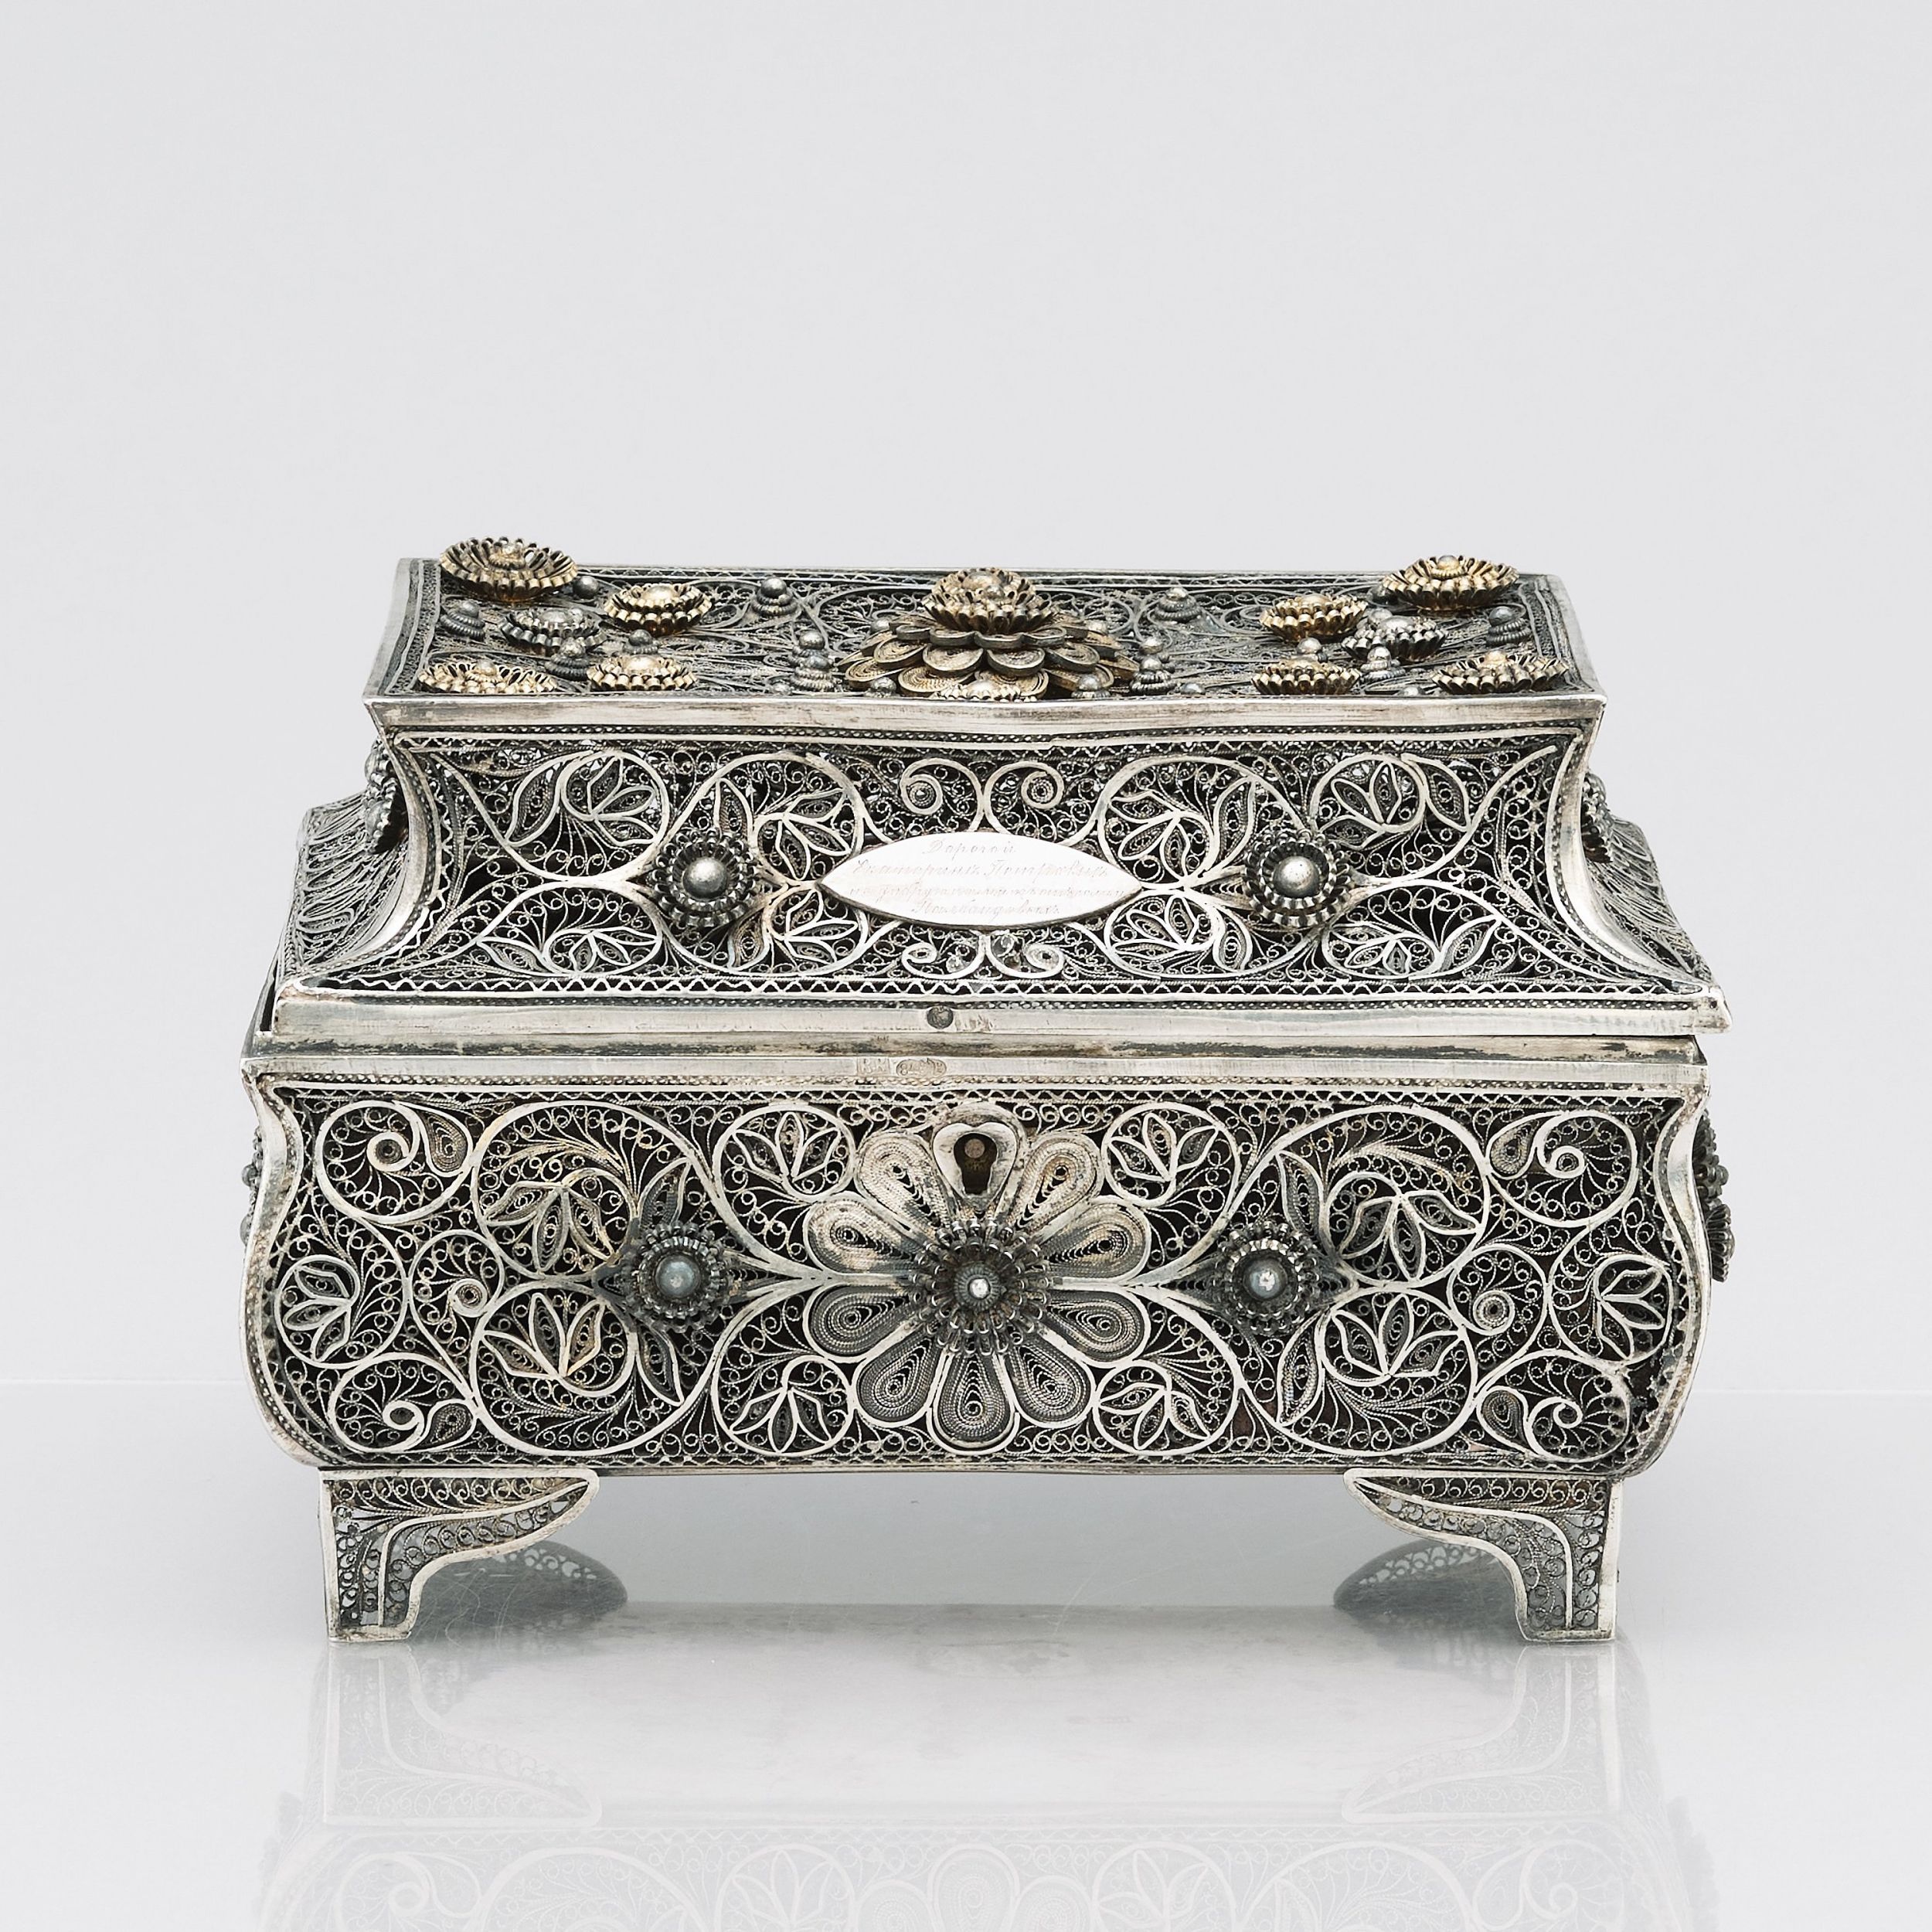 Silver filigree box from the 19th century. Odessa, Russian Empire, 1898-1908 - Image 7 of 7